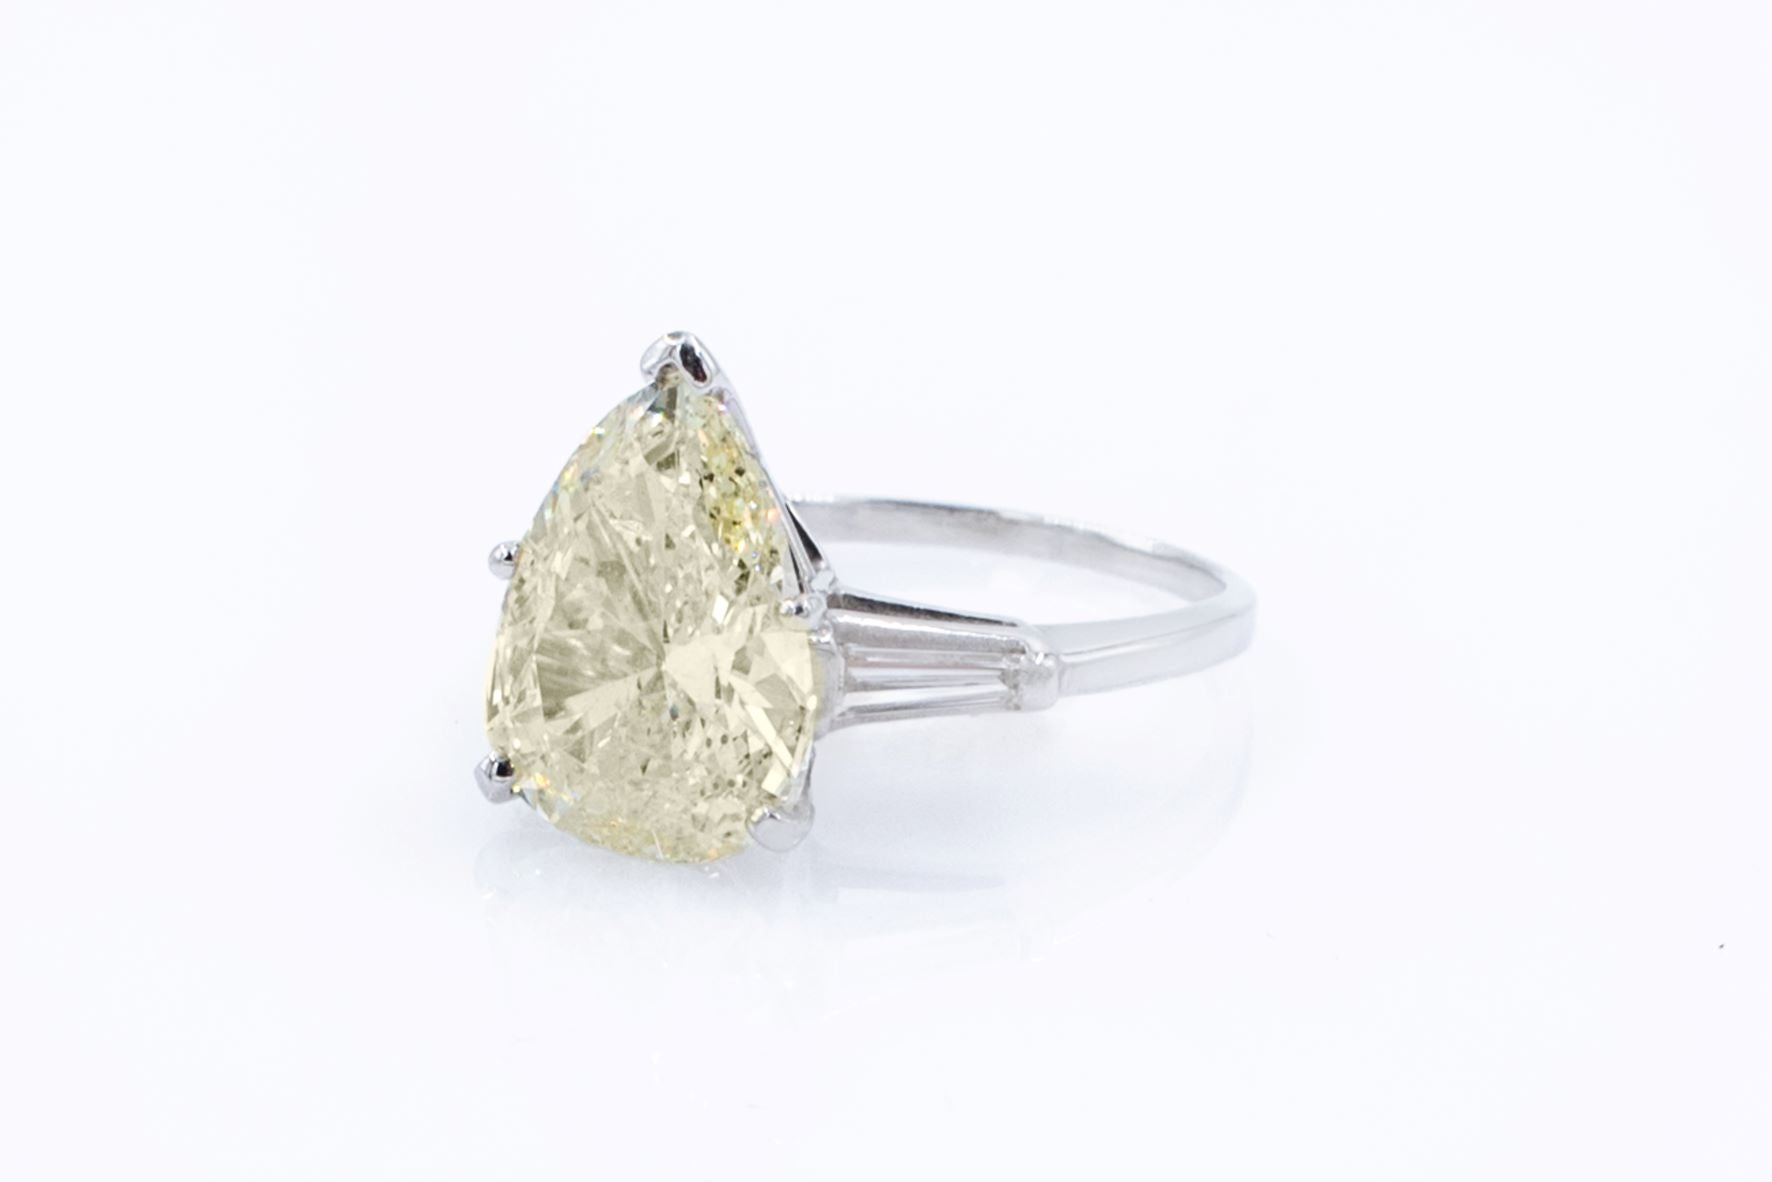 HUGE!!! 4.08 ct Pear Cut Diamond Ring